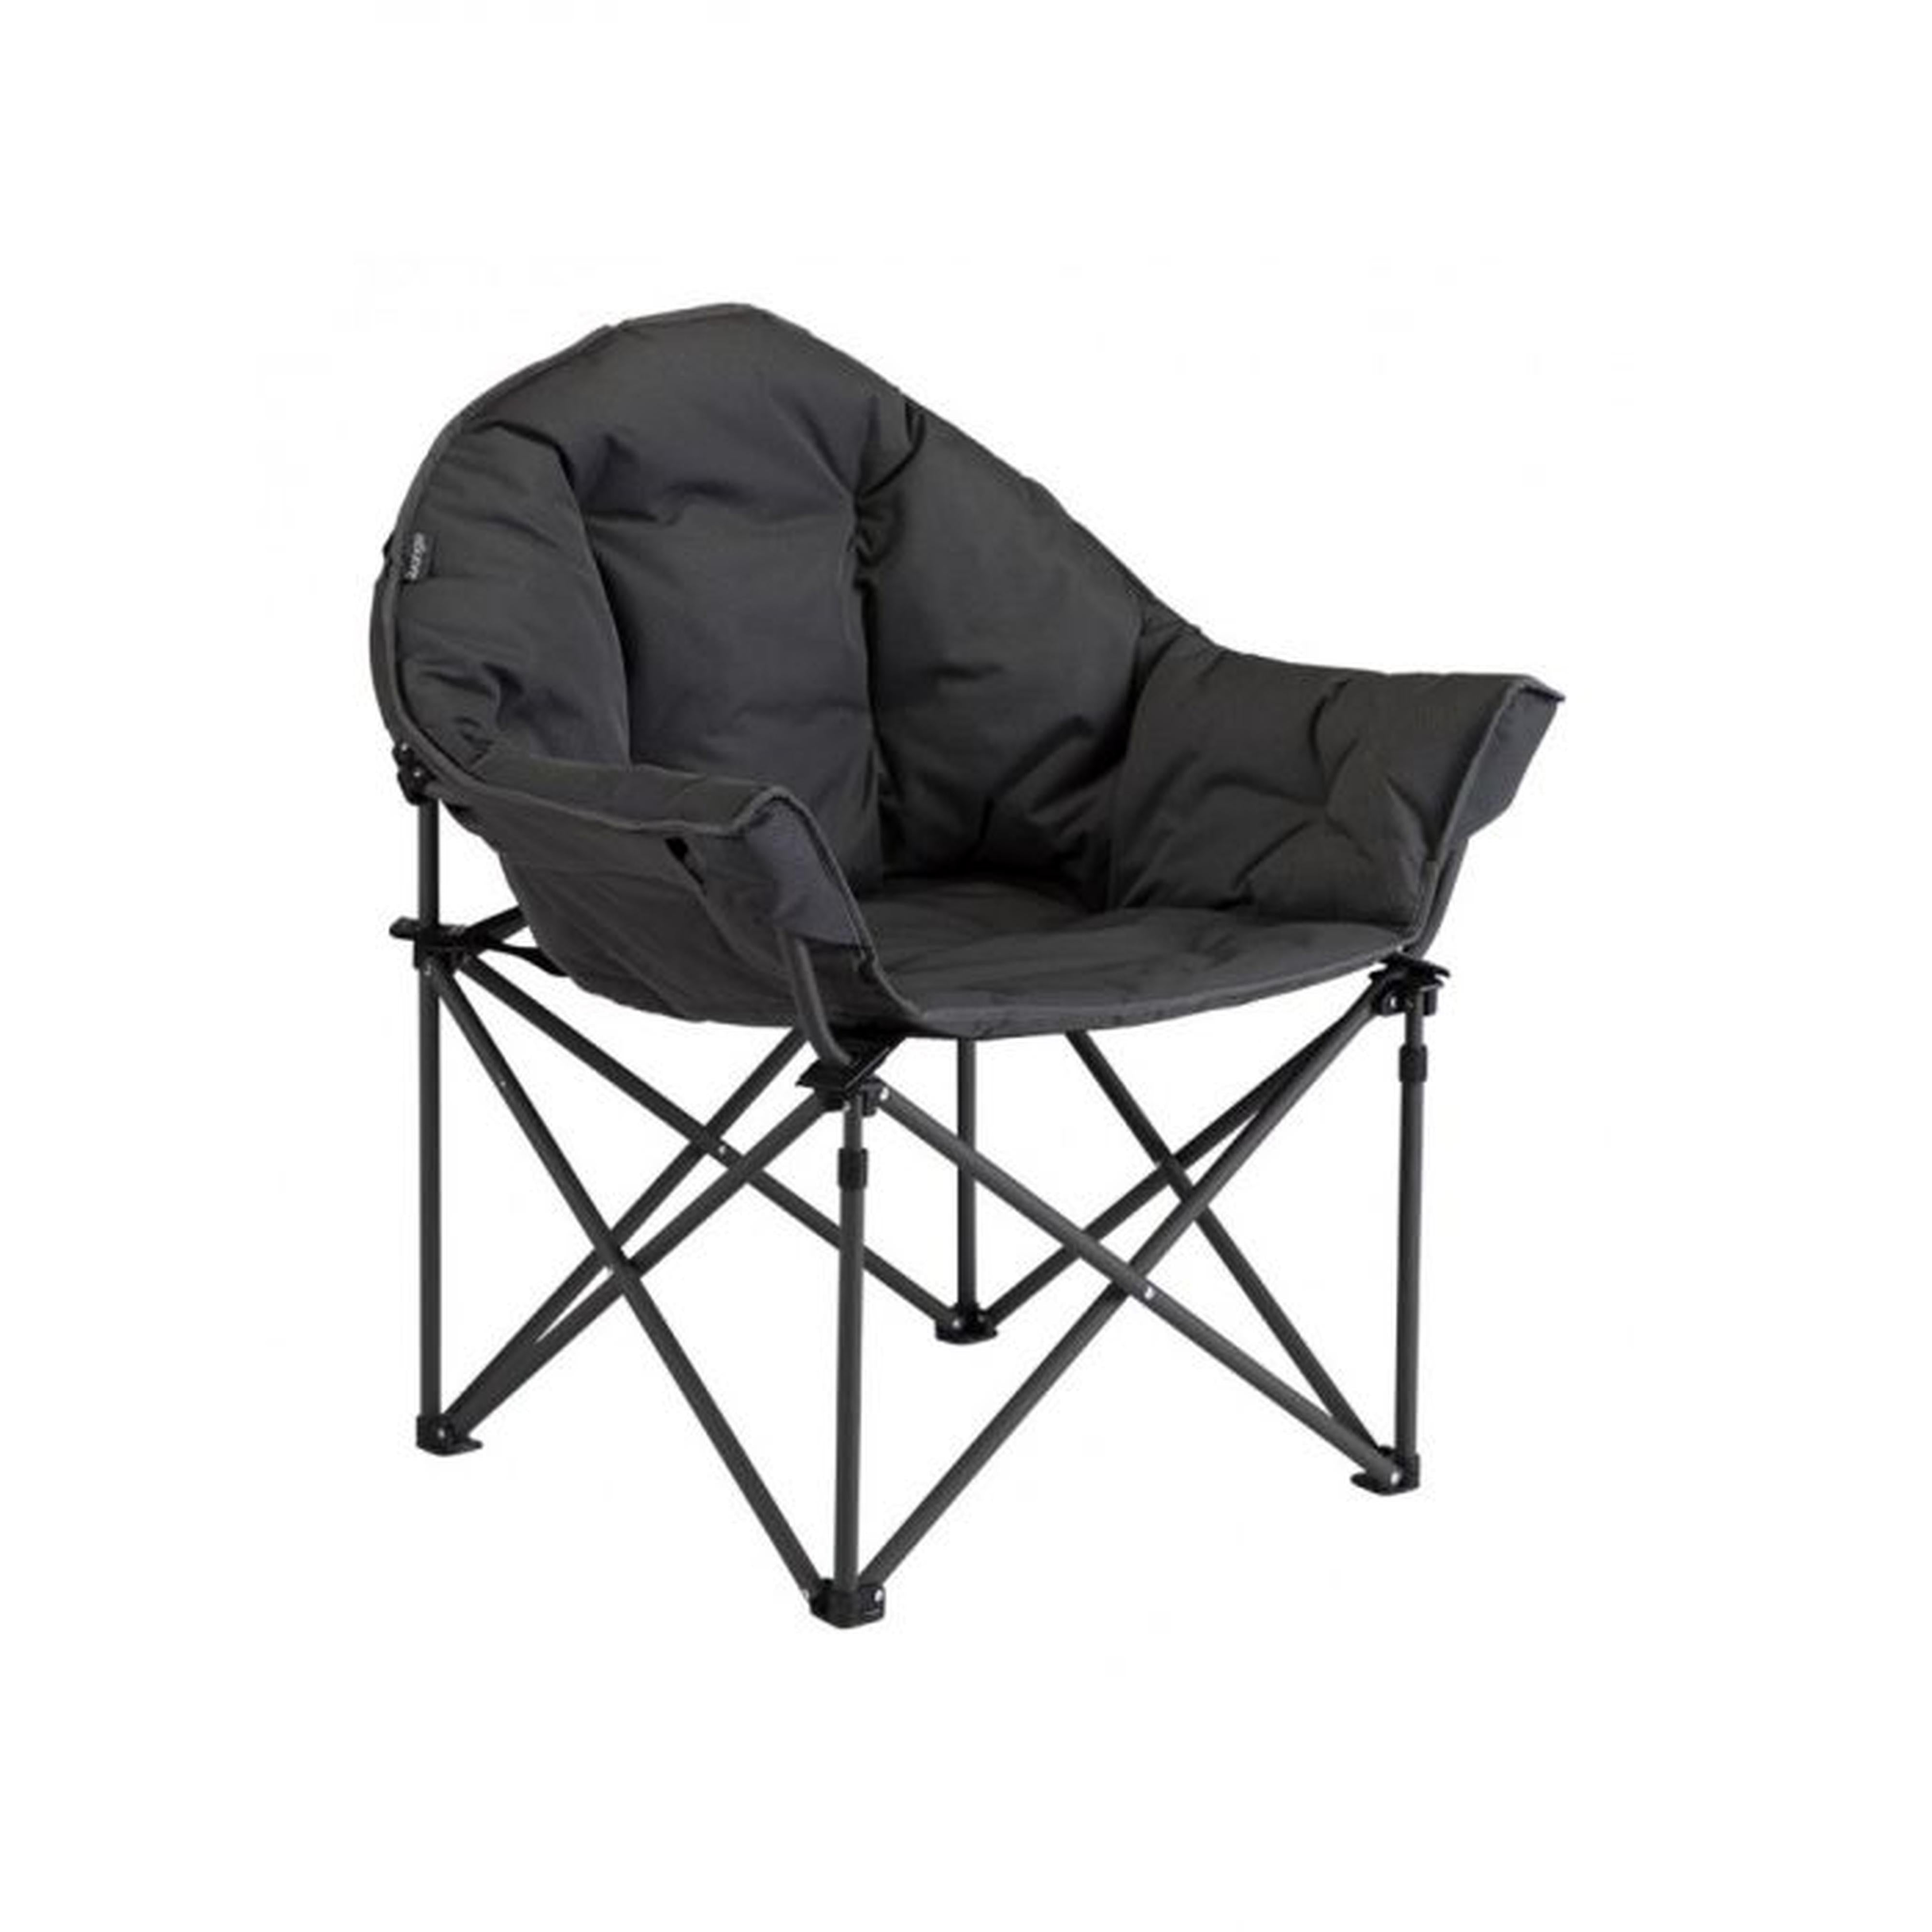 vango titan 2 oversized camping chair